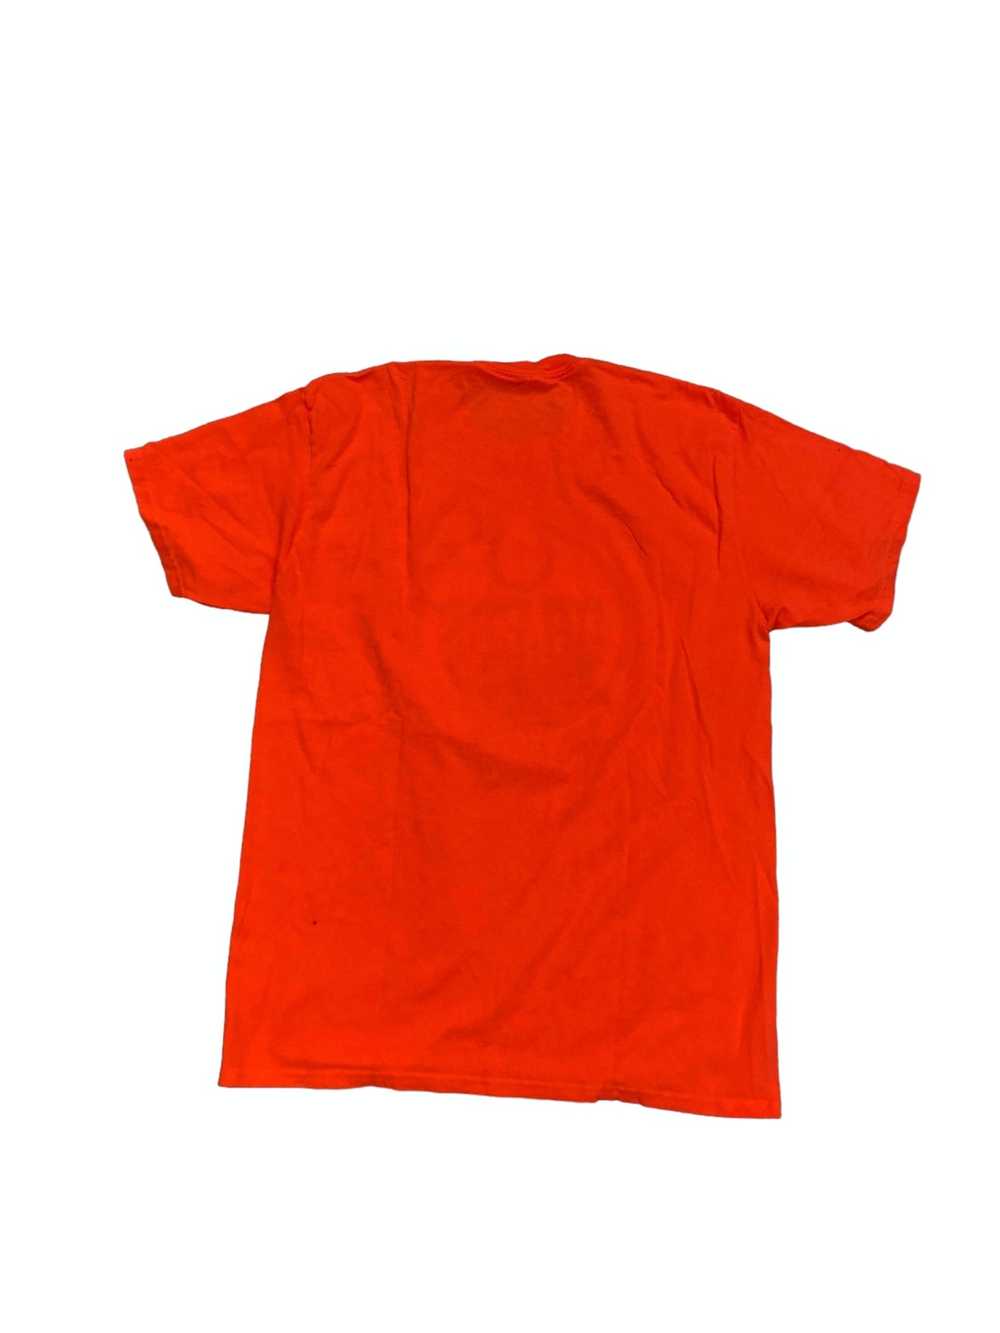 NHL Vintage CGW Edmonton Oilers Shirt Orange Large - image 2